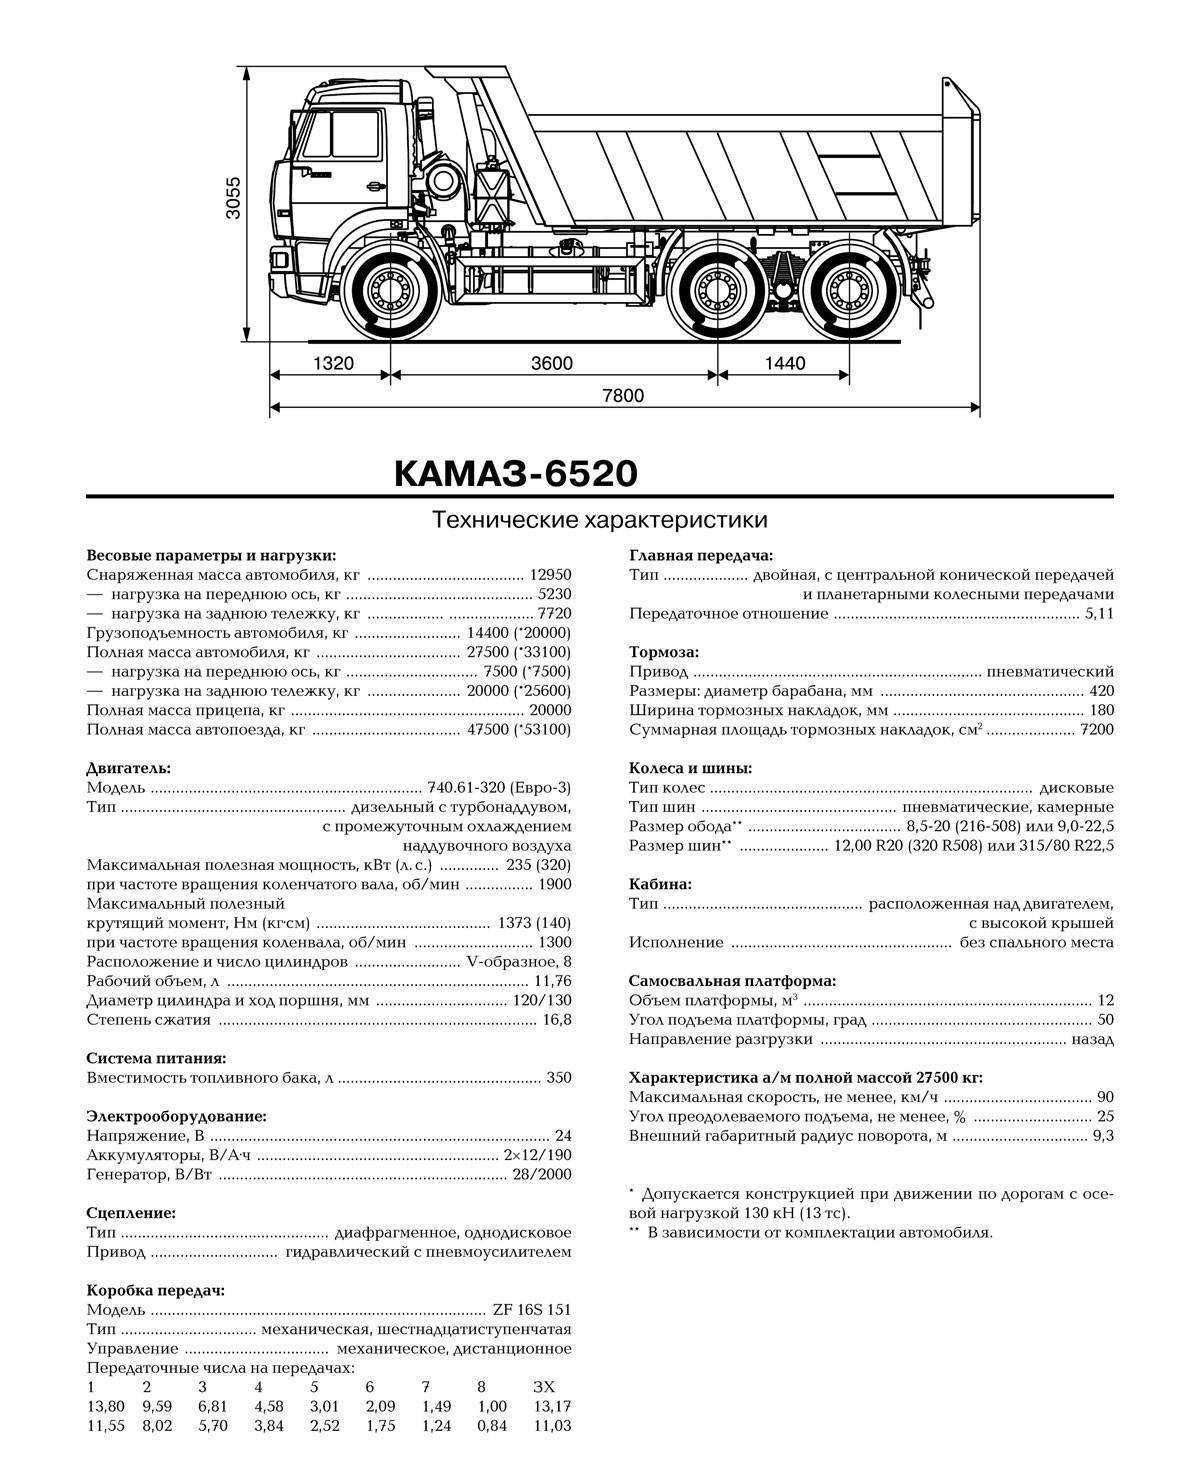 Маз сколько кубов. Параметры КАМАЗ 6520 самосвал. КАМАЗ 6520 самосвал 20 кубов габариты. КАМАЗ 6520 евро 2 технические характеристики. КАМАЗ-6520 технические характеристики грузоподъемность.